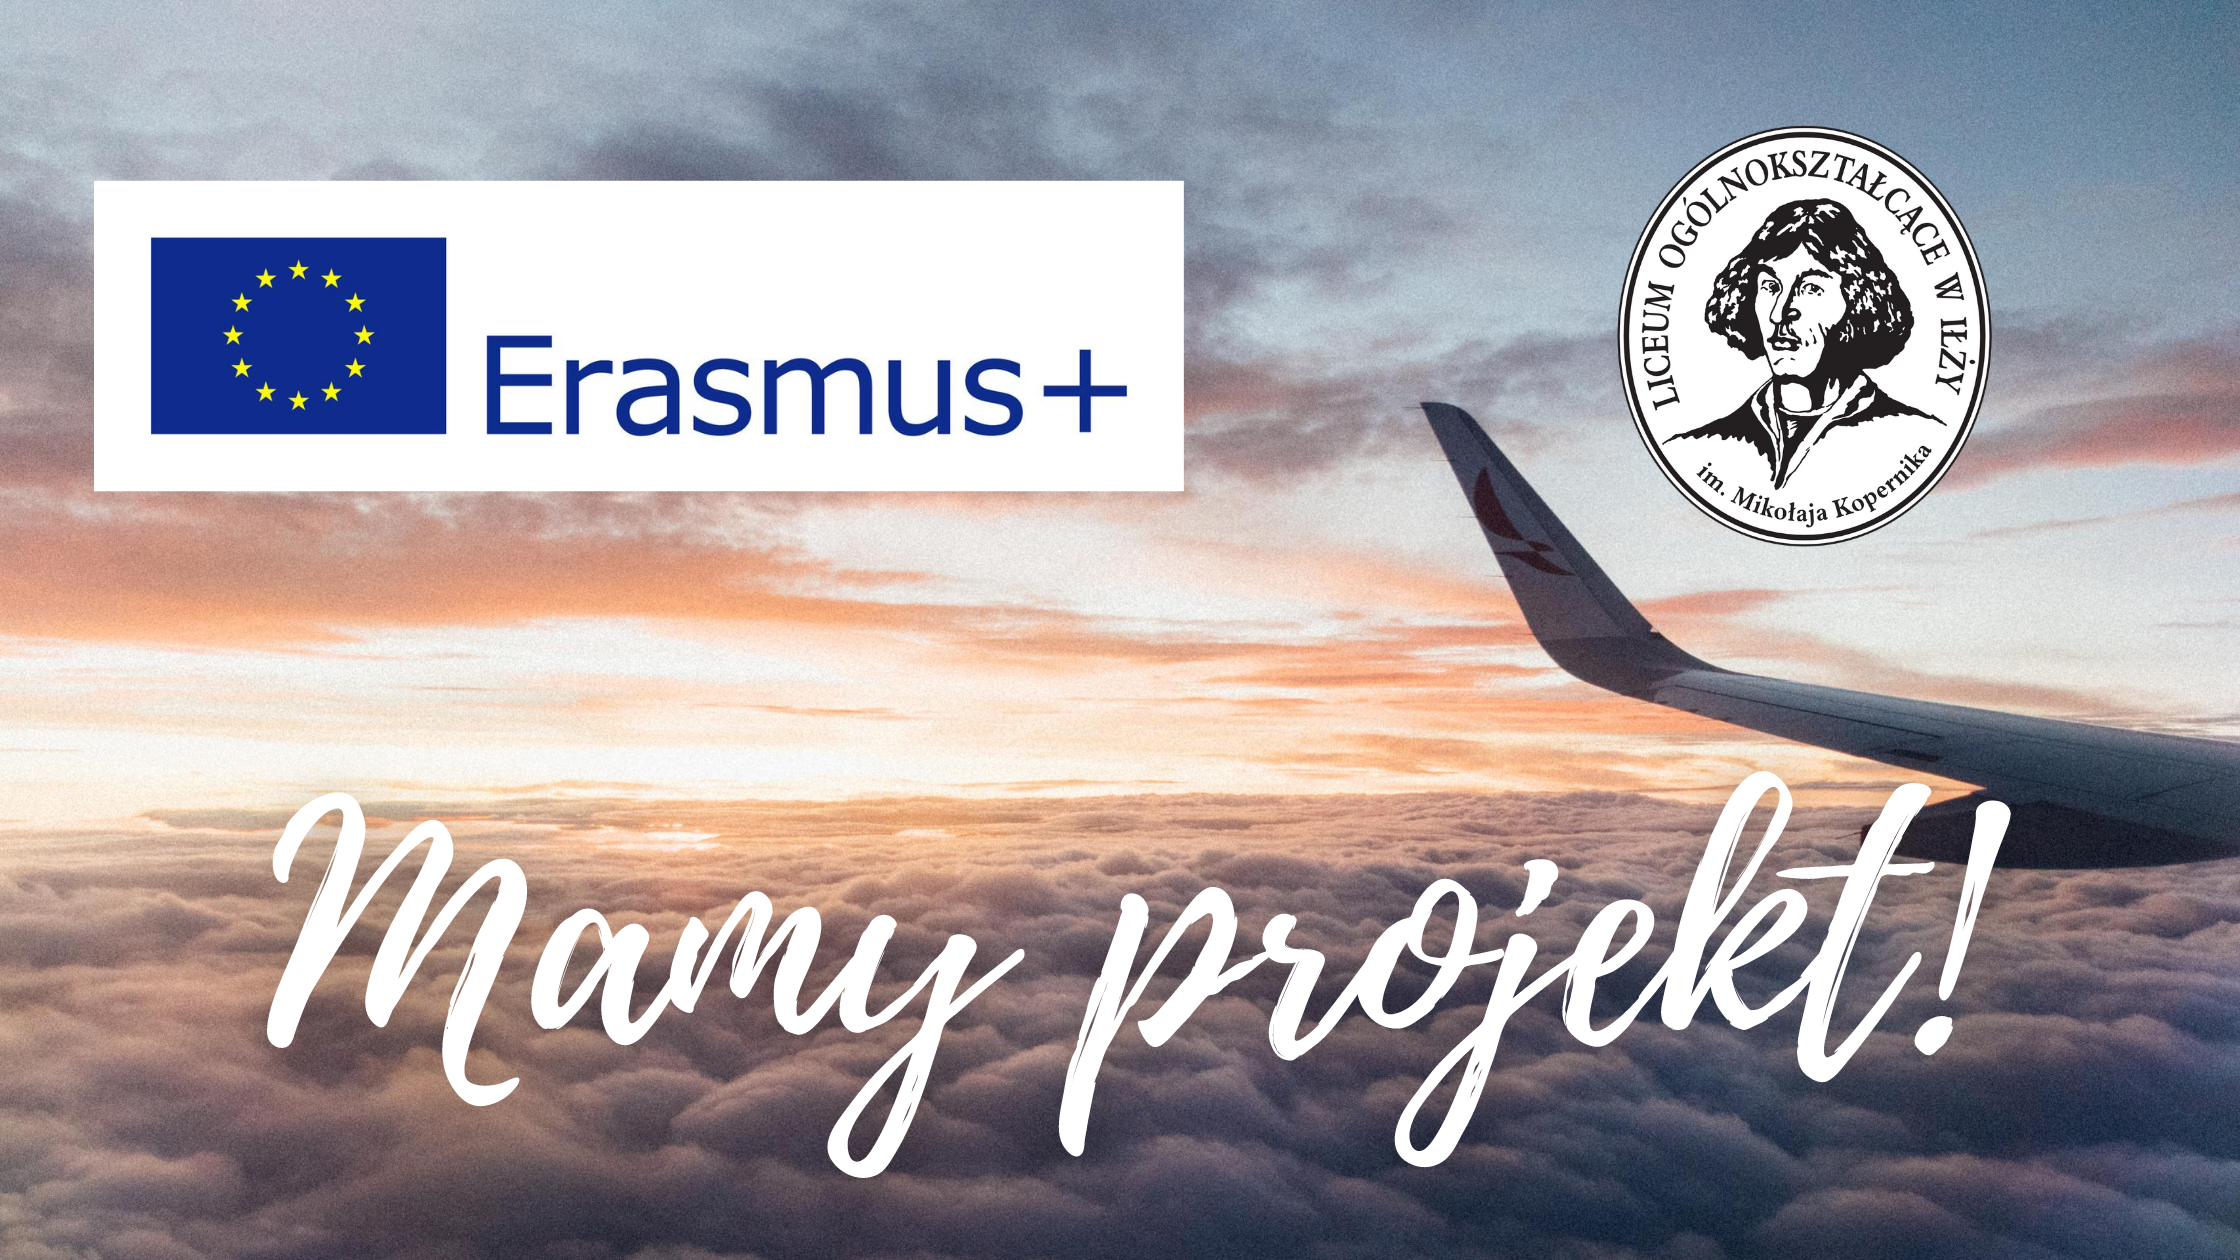 mamy kolejny projekt Erasmus+